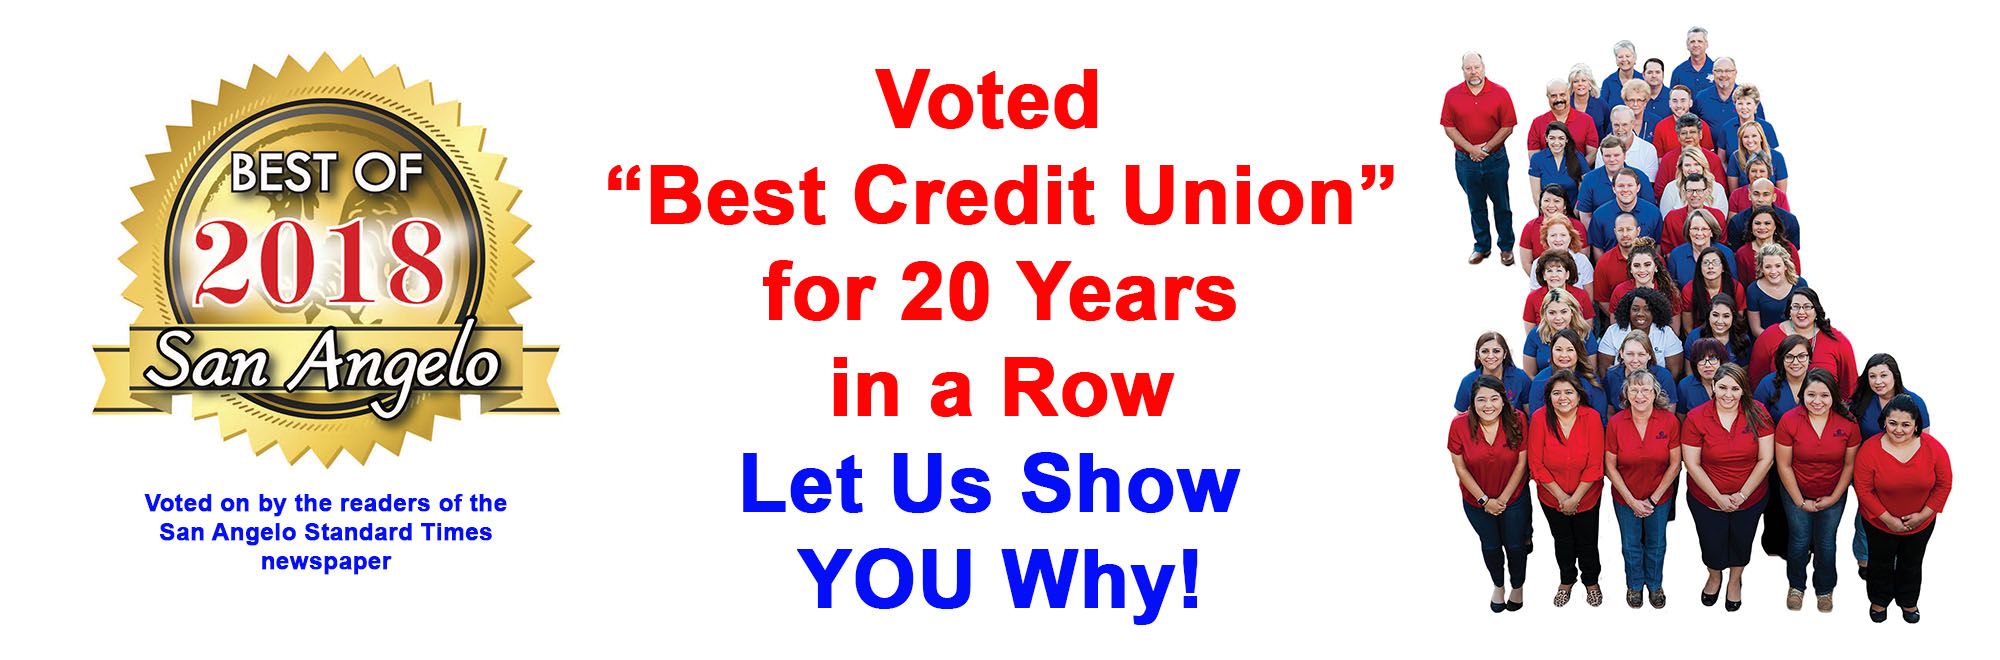 1st Community Federal Credit Union